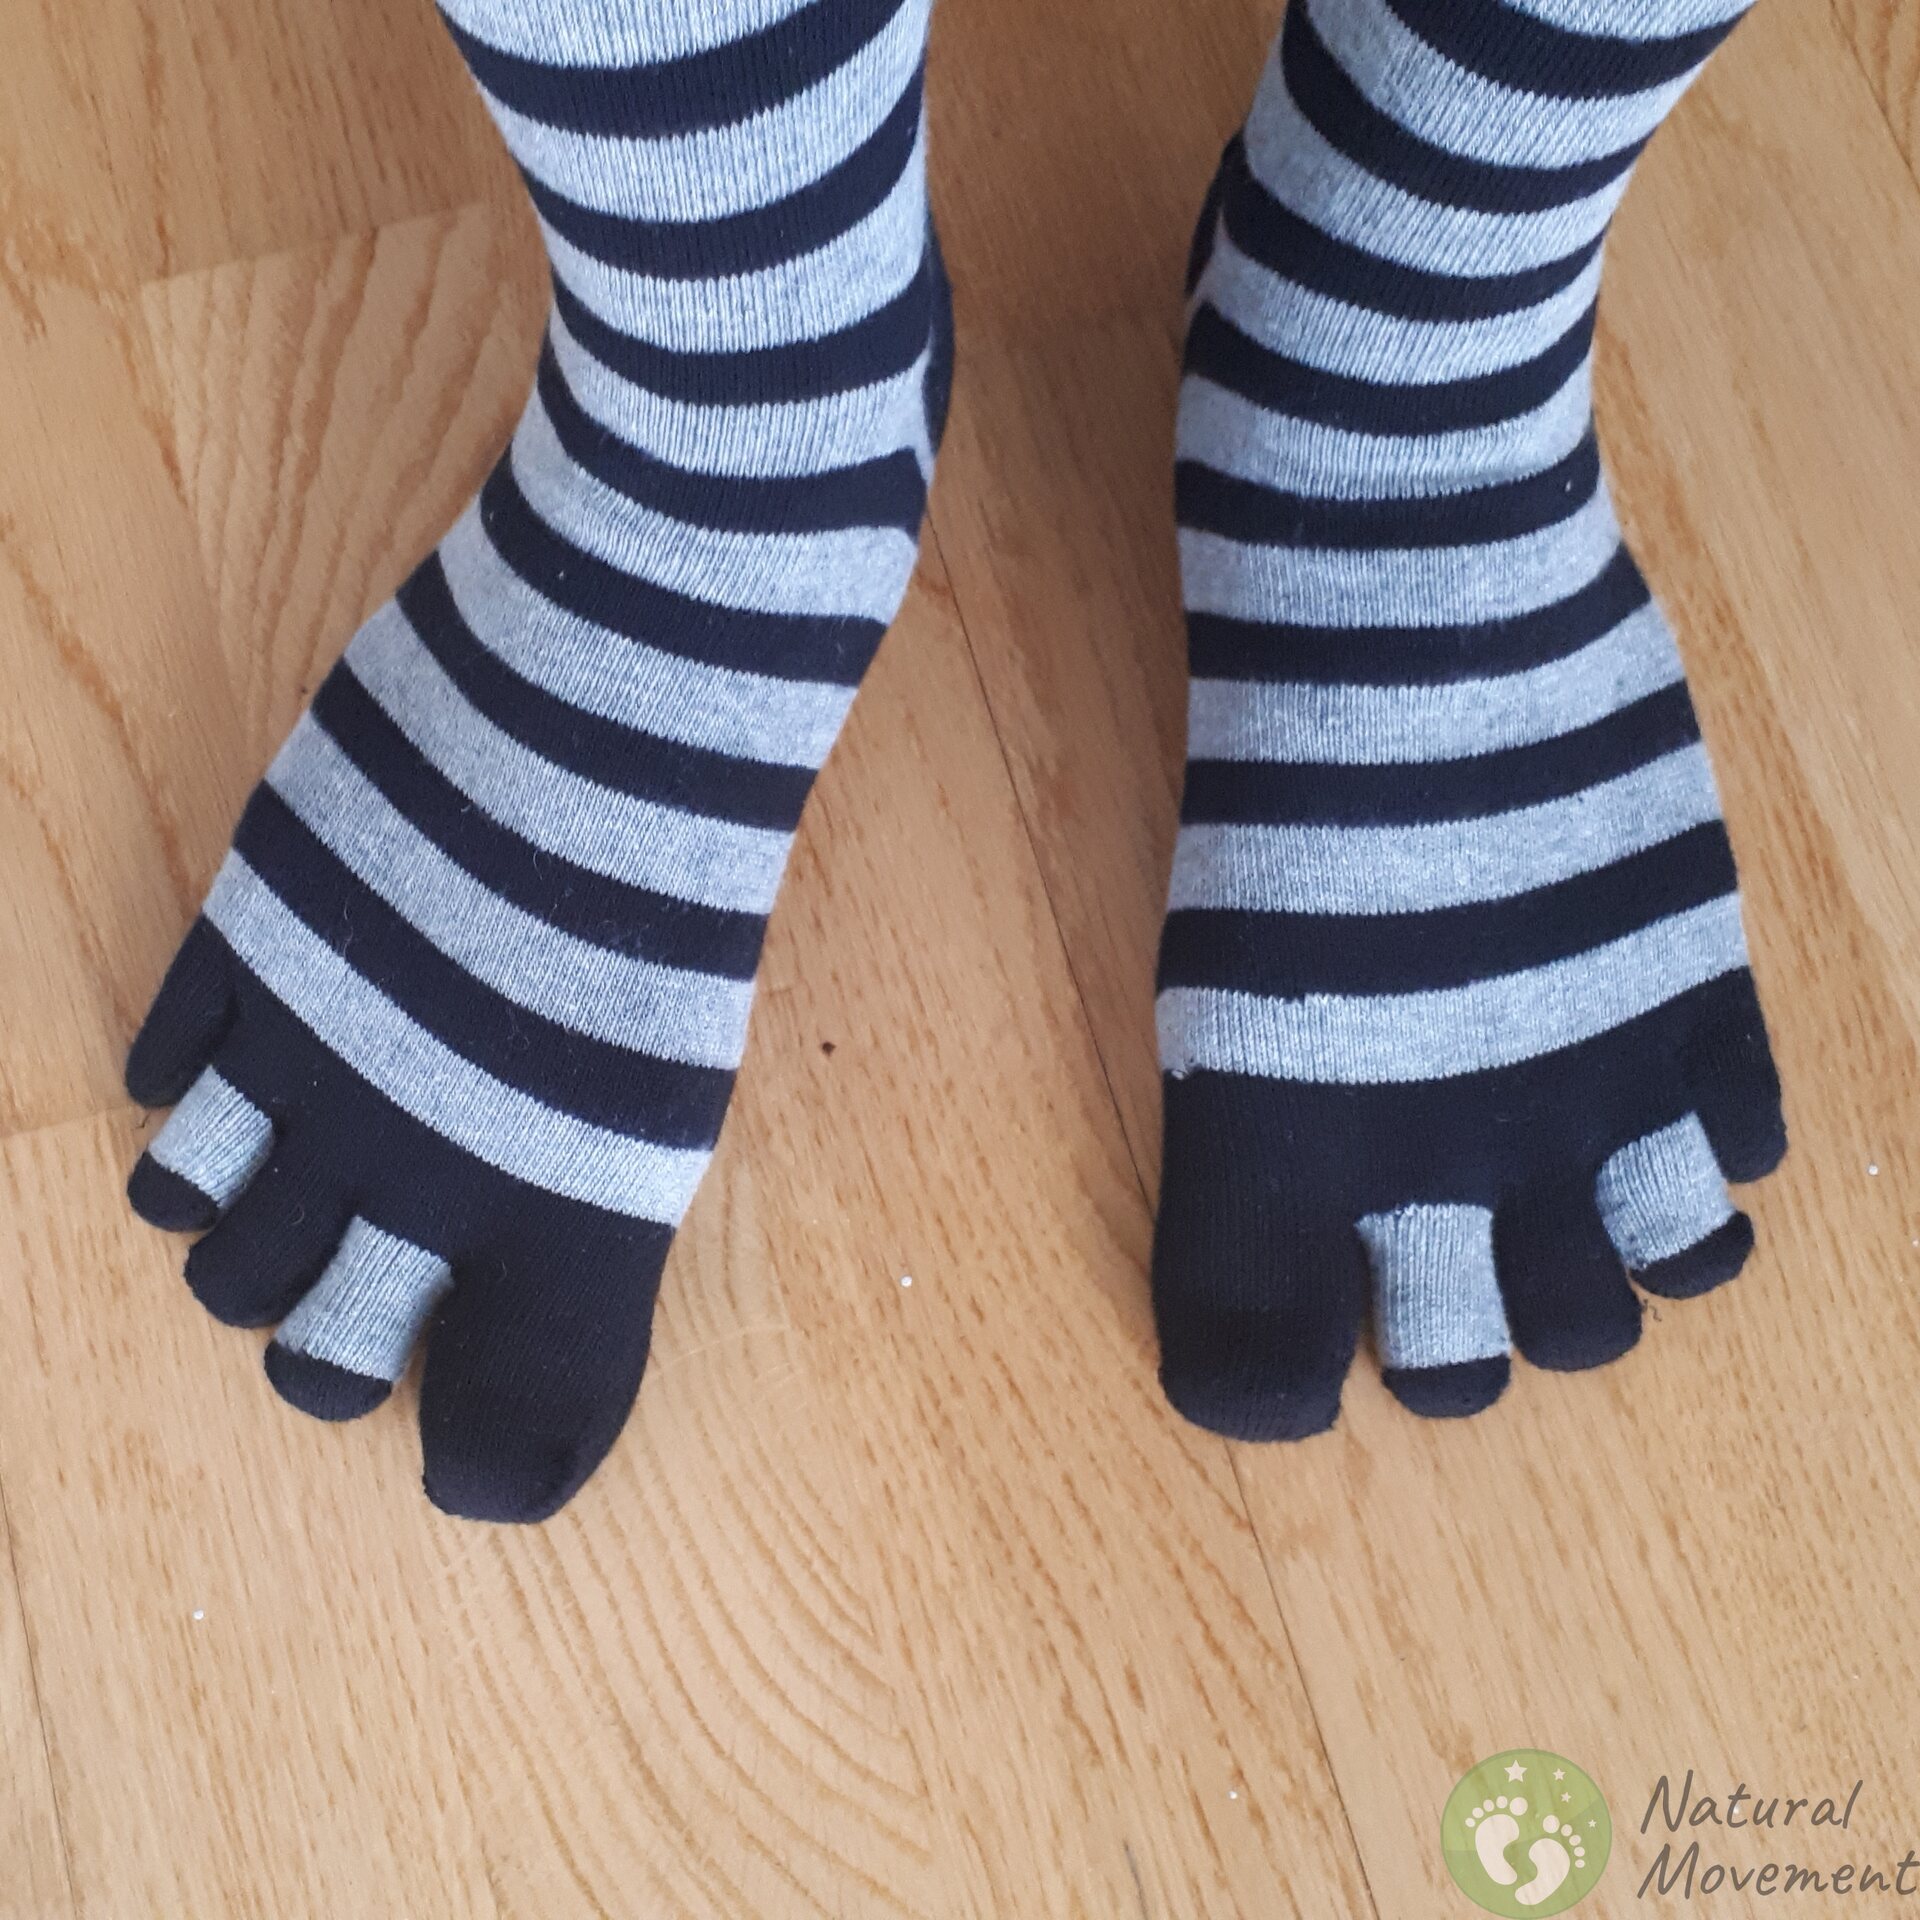 TOETOE Women Essential Stretchy Knee-high Soft Cotton Seamless Stripy Toe  Socks, Hygienic, Breathable, Uk 4-11 Eu 35-46 Us 4.5-11.5 -  Canada